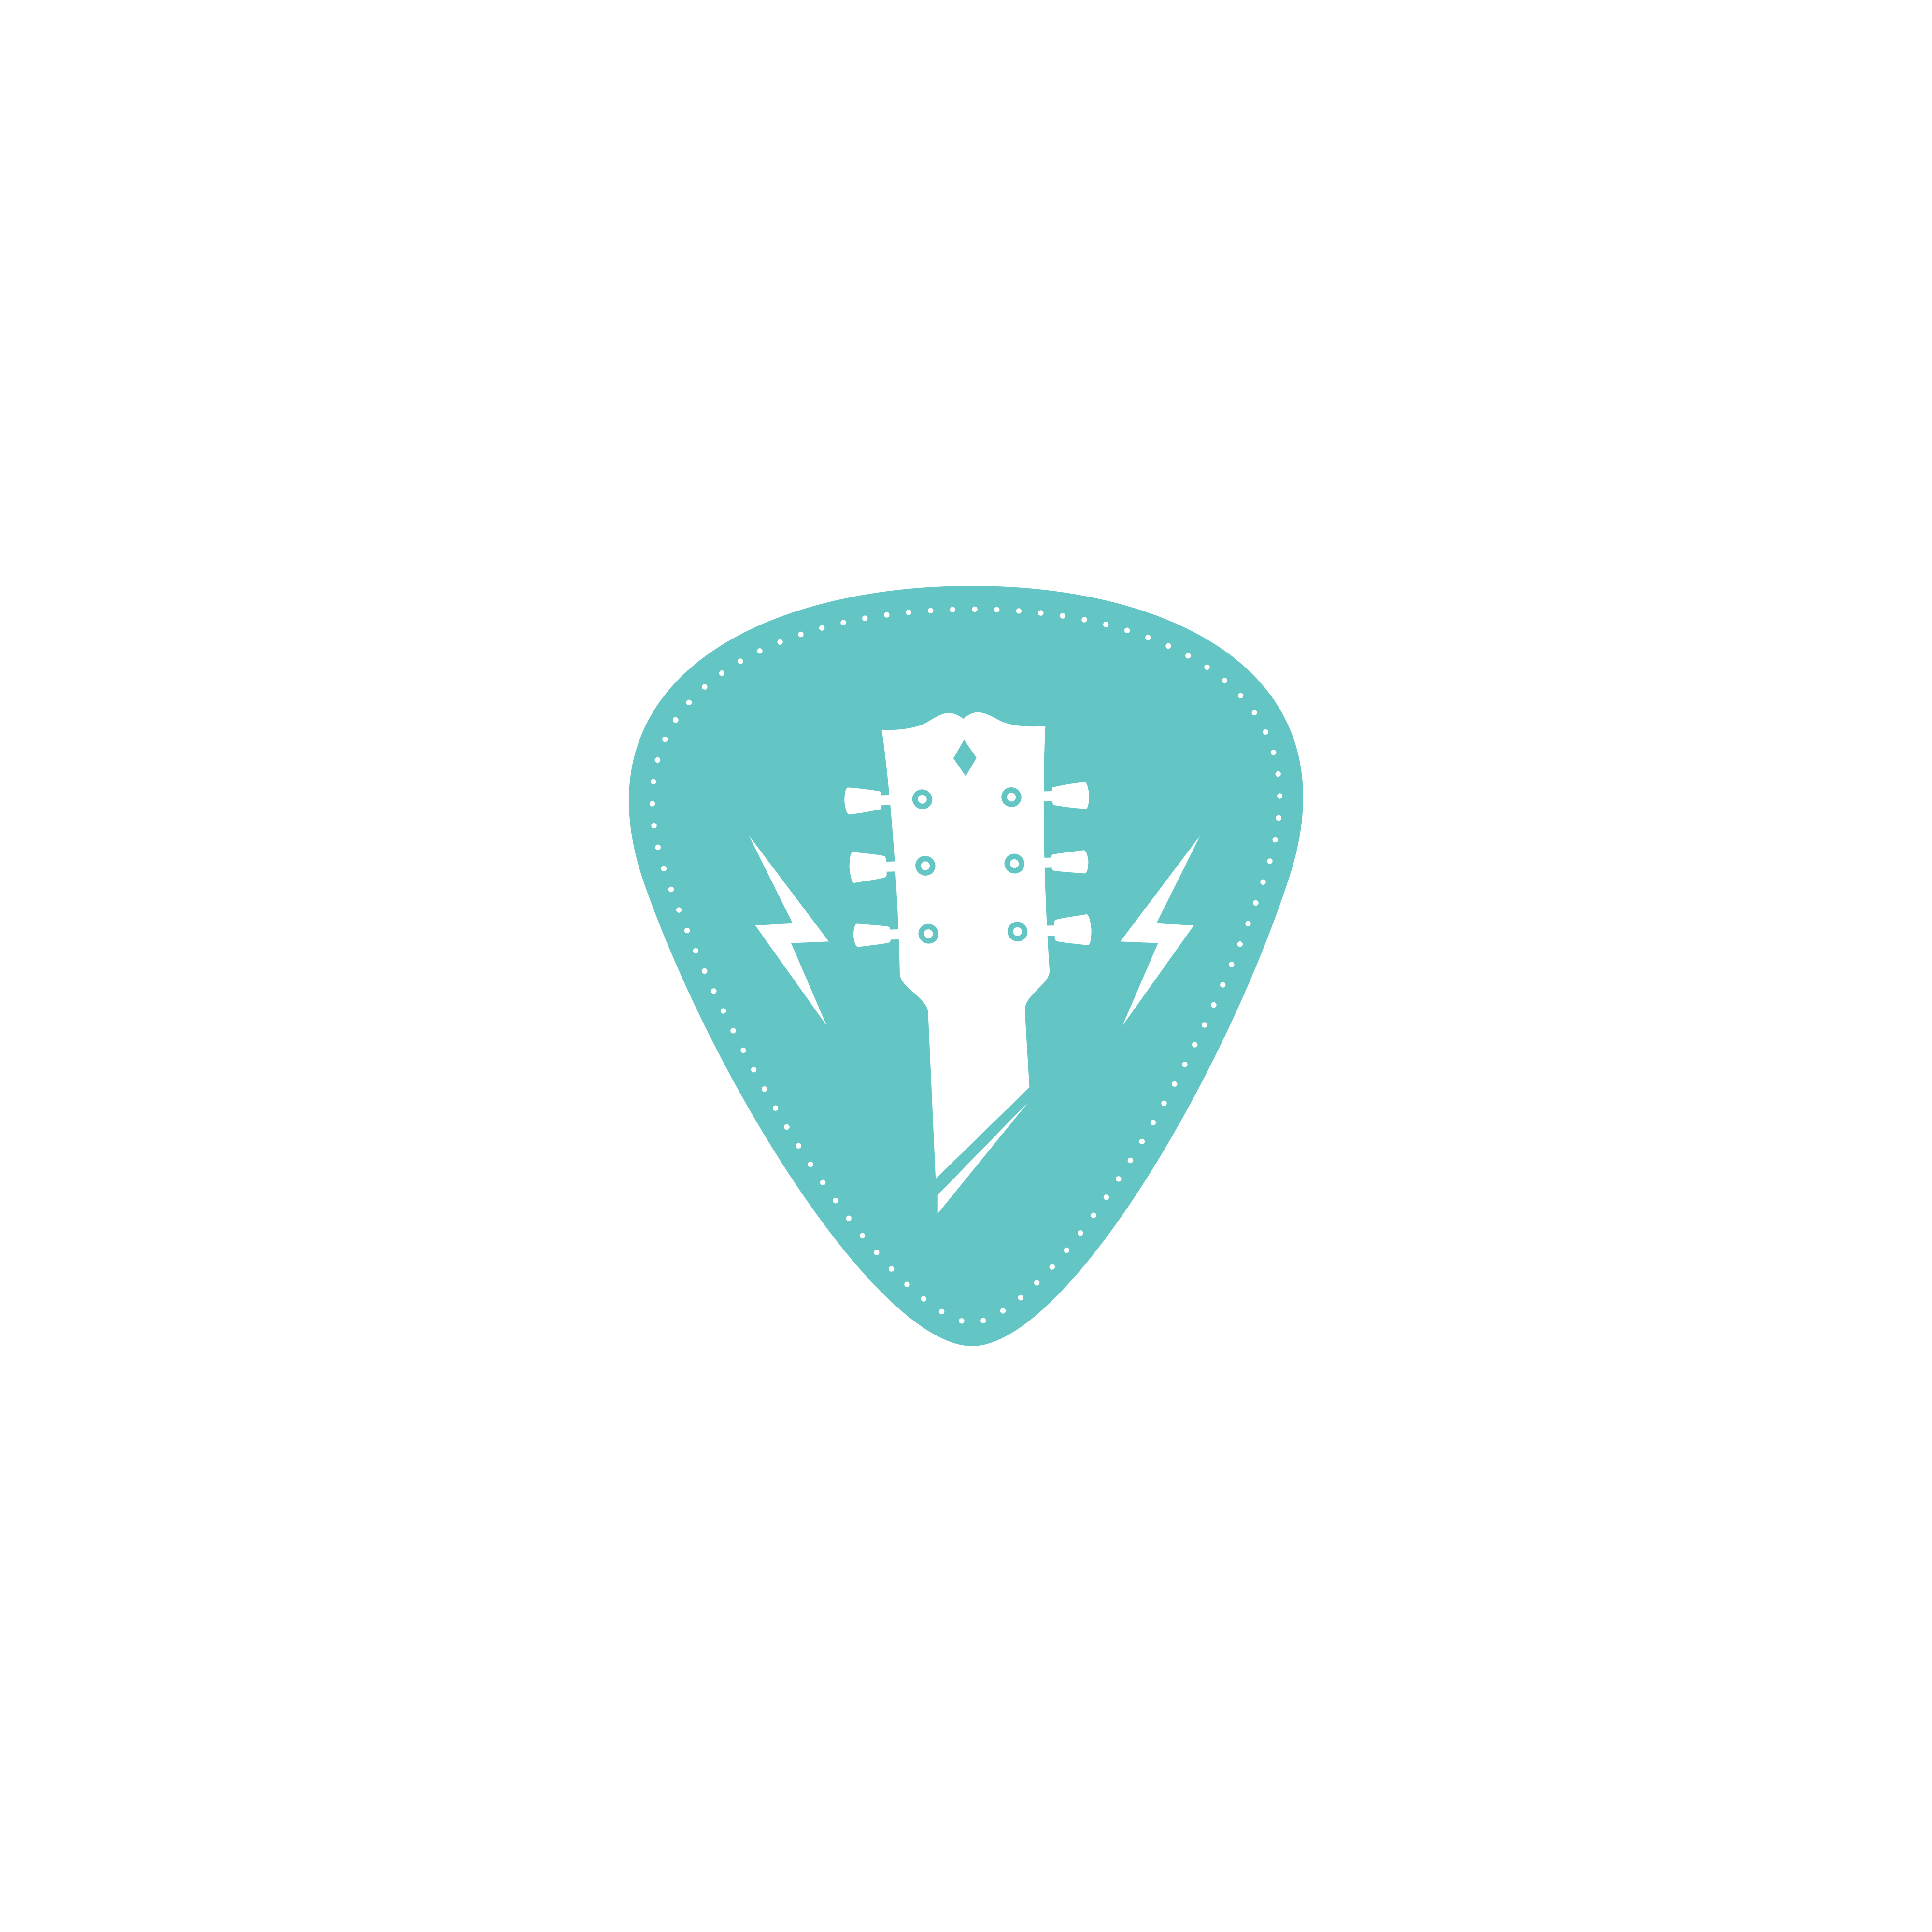 rick lockwood